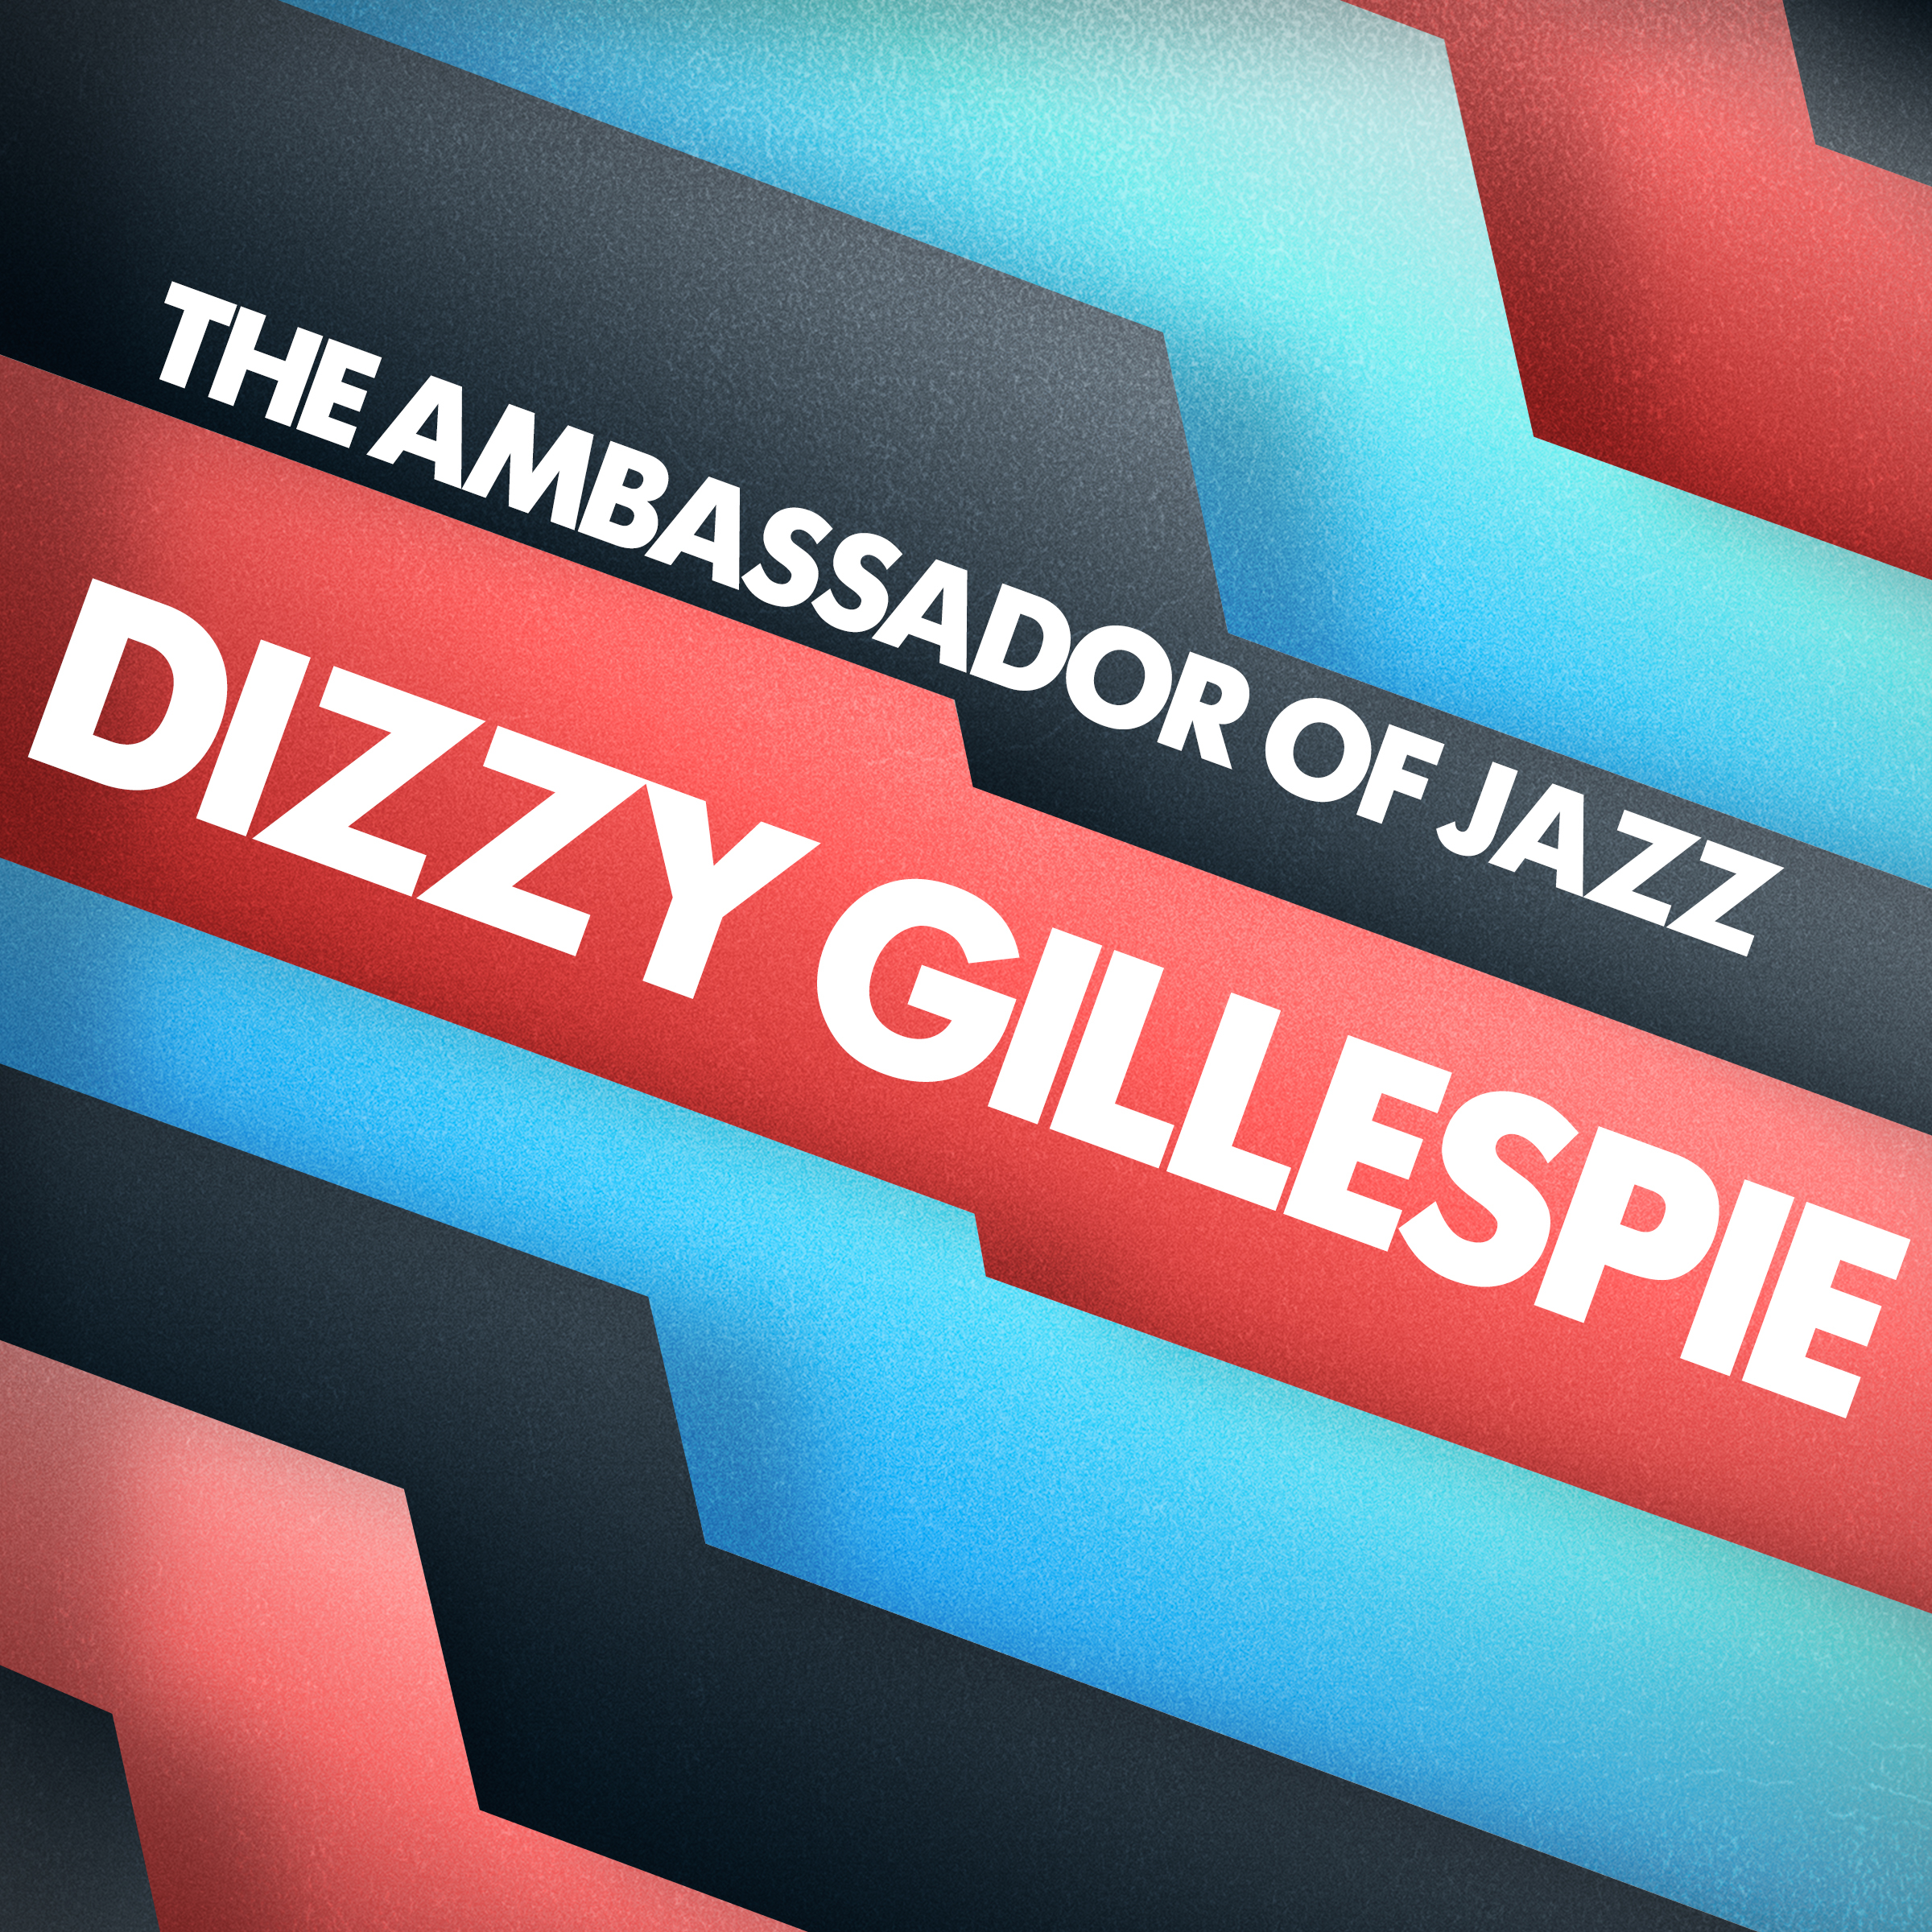 The Ambassador of Jazz